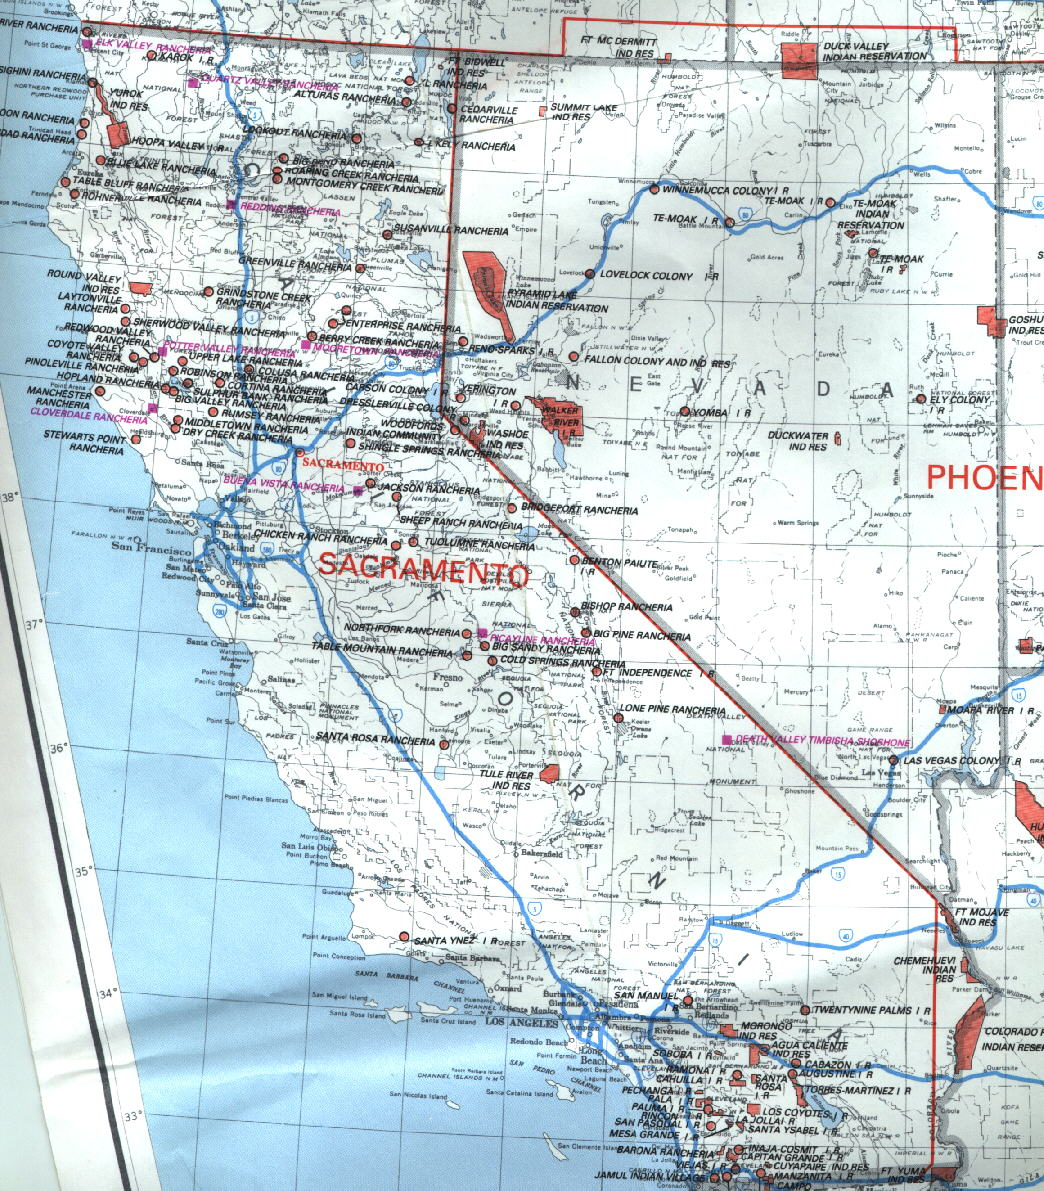 Map Of California And Nevada - Klipy - Map Of California And Nevada